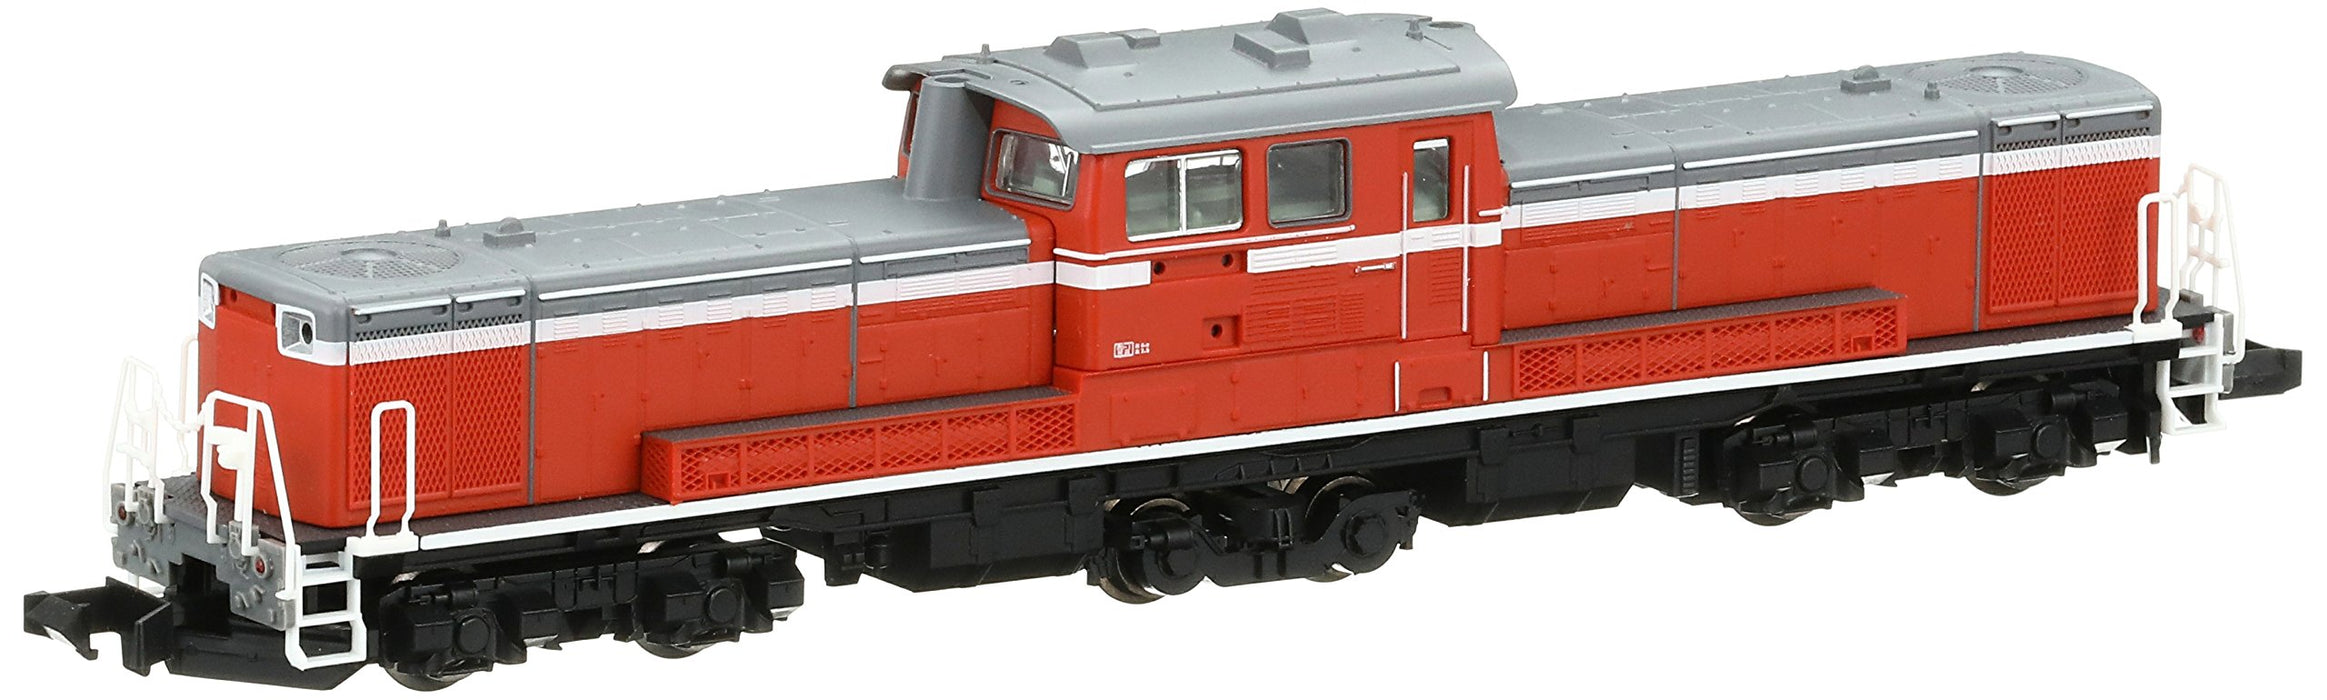 Tomytec Tomix N Gauge Dd51-1000 Warm Region Diesel Locomotive Railway Model 2219